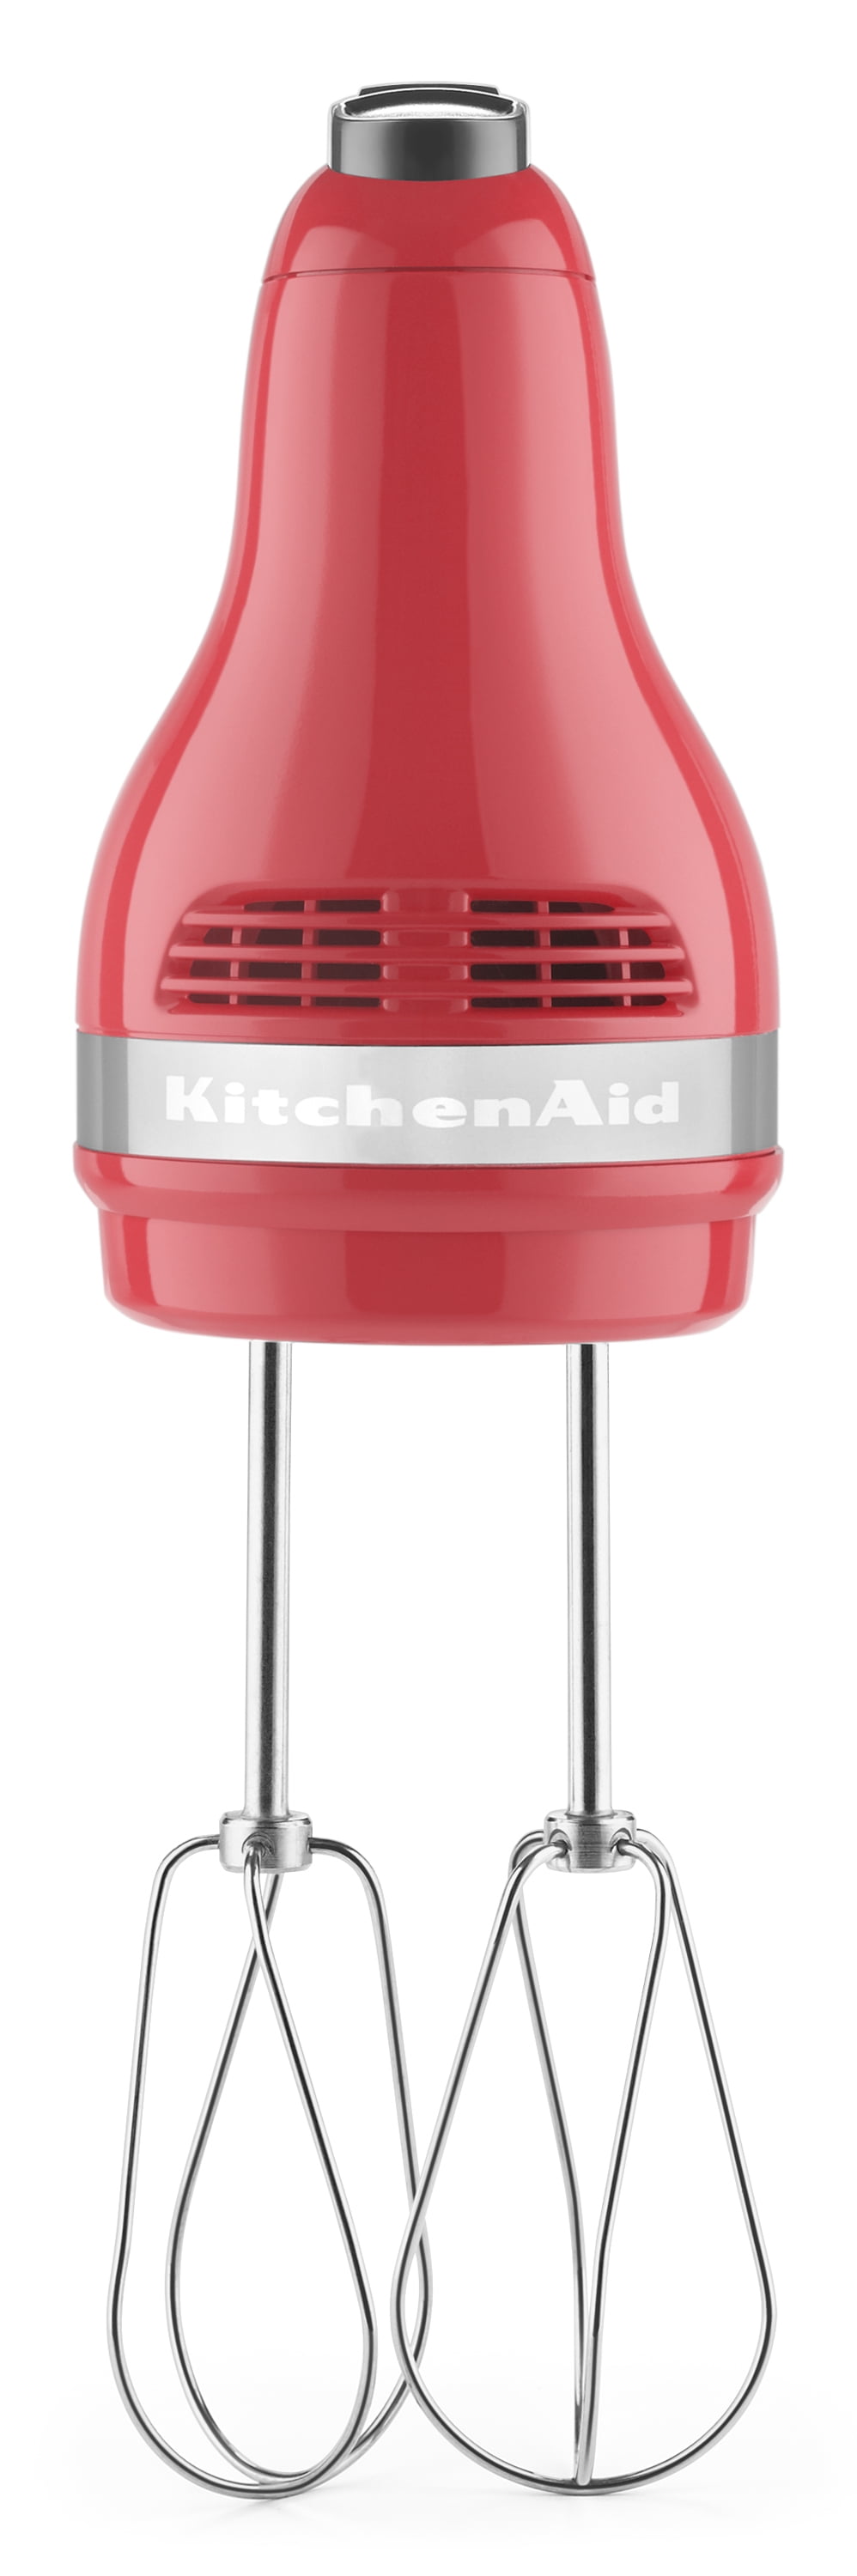 KitchenAid 5-Speed Ultra Power Hand Mixer Contour Silver KHM512CU